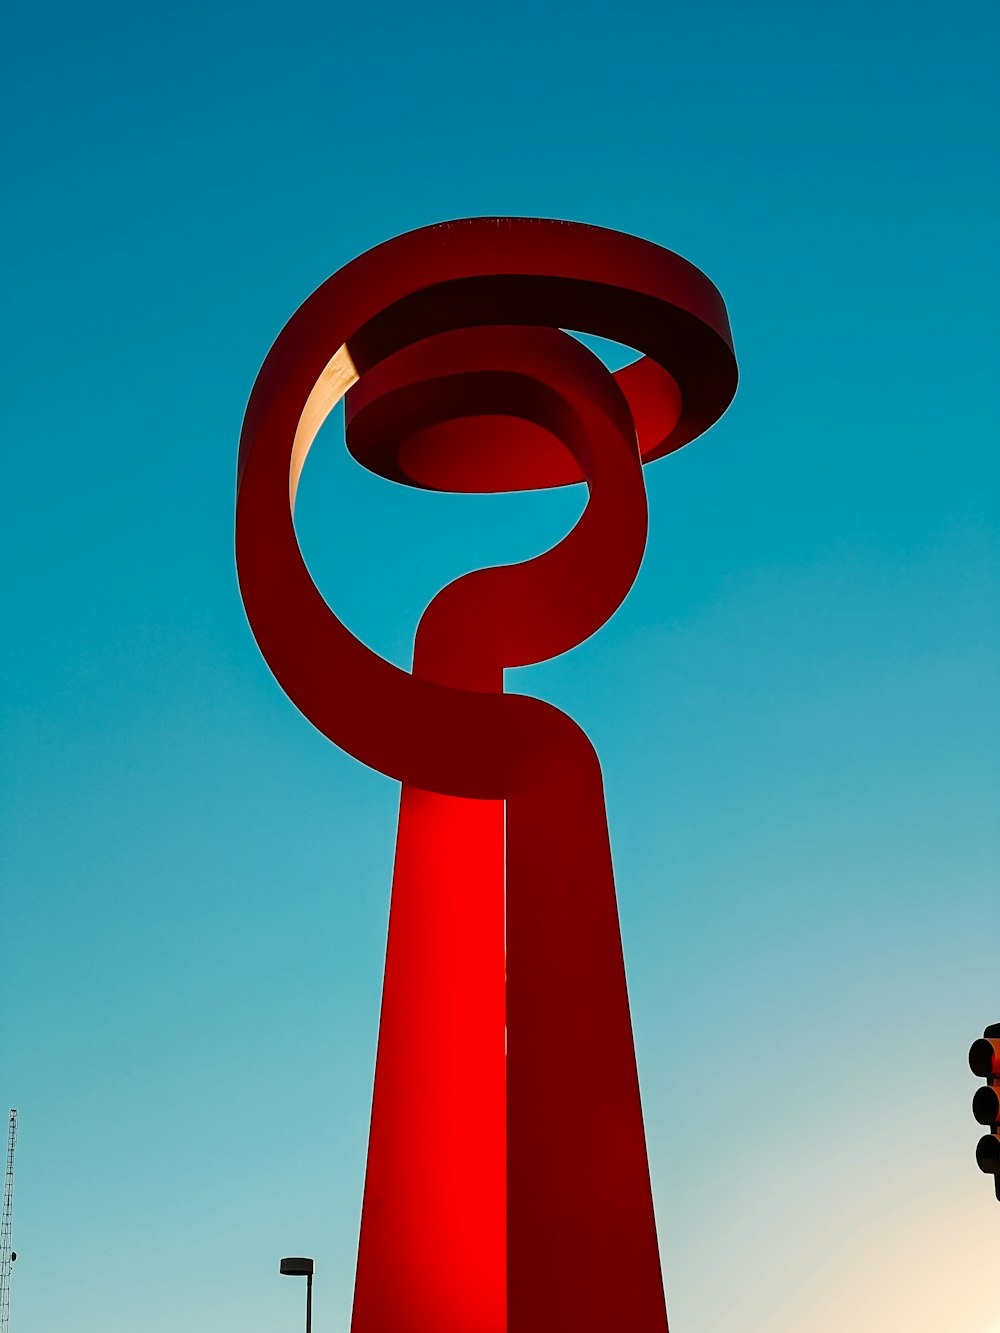 a tall red sculpture sitting next to a traffic light